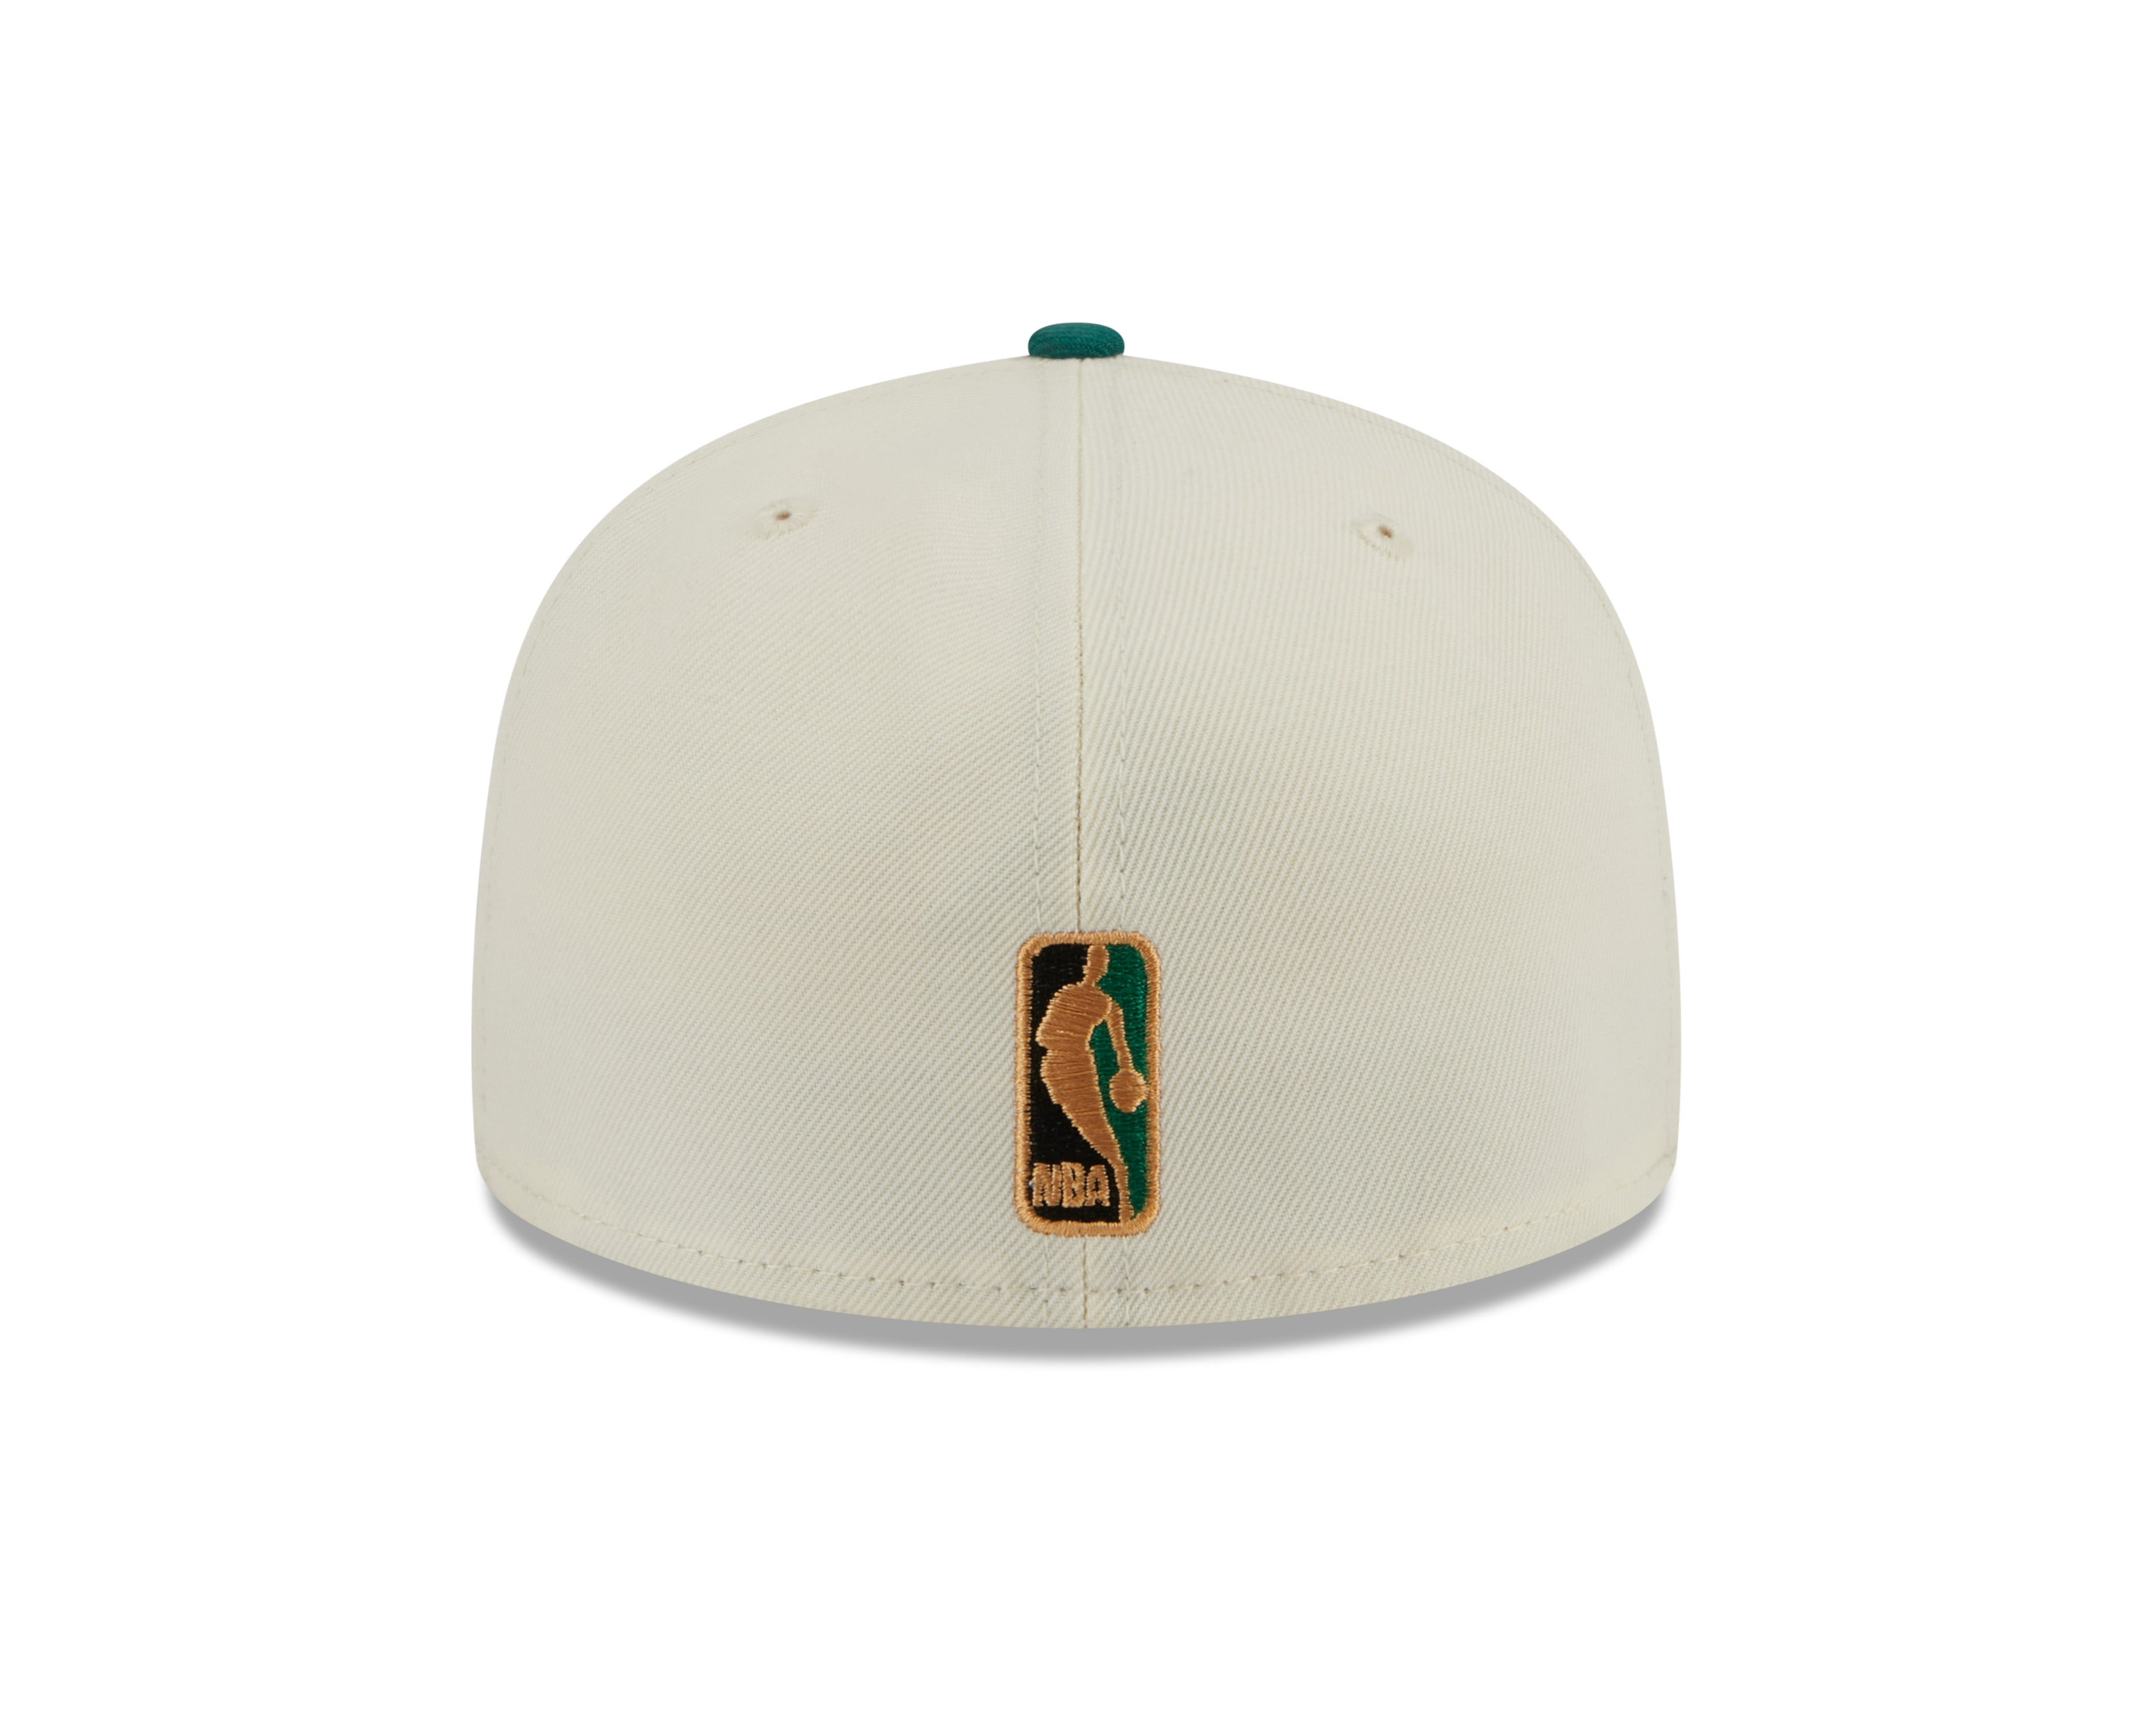 New Era - 59Fifty Fitted Cap - CAMP - Boston Celtics - White/Green - Headz Up 